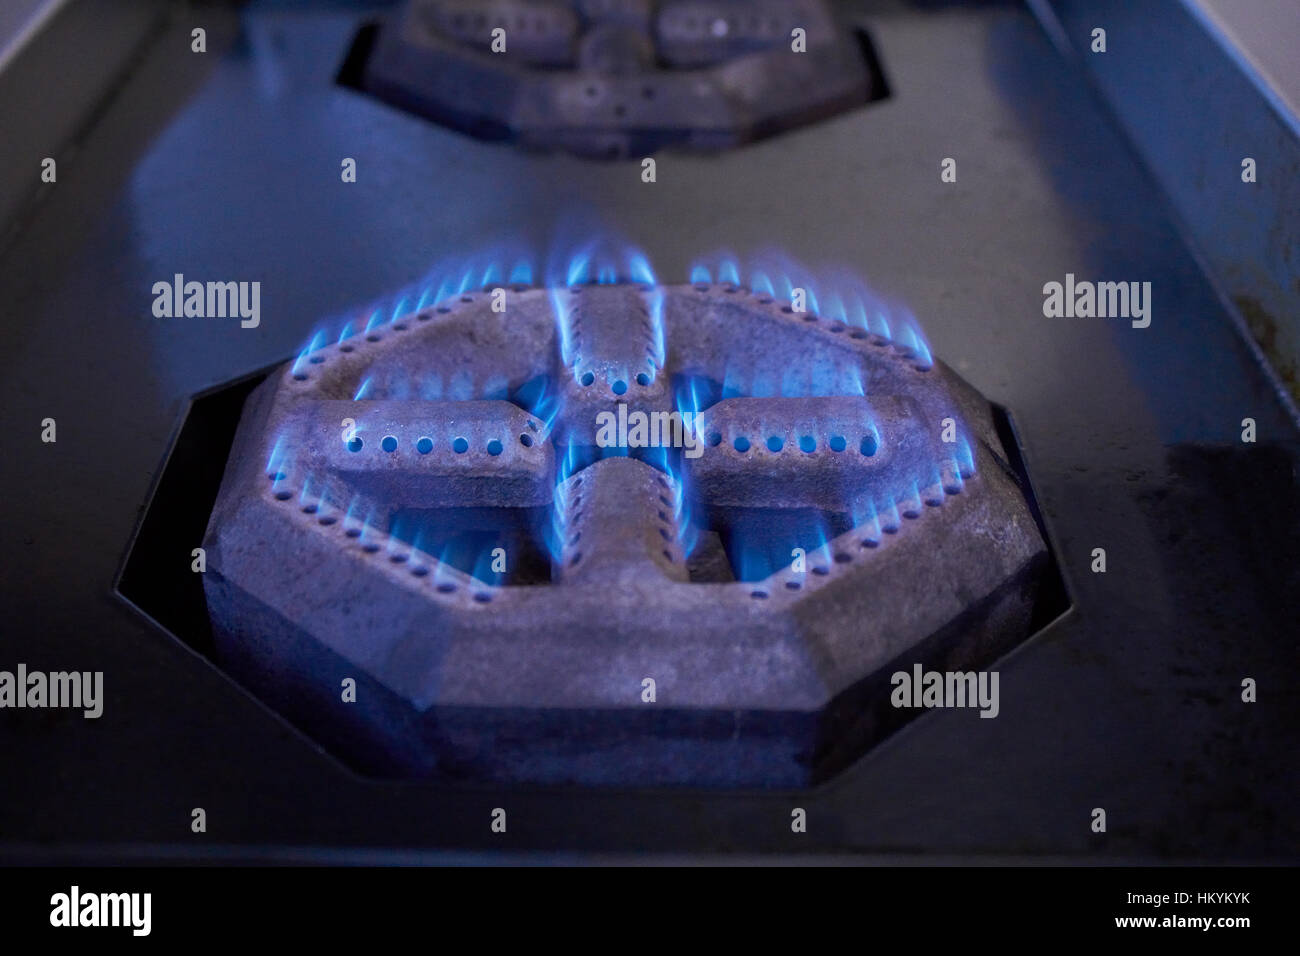 Natural gas stove burner Stock Photo